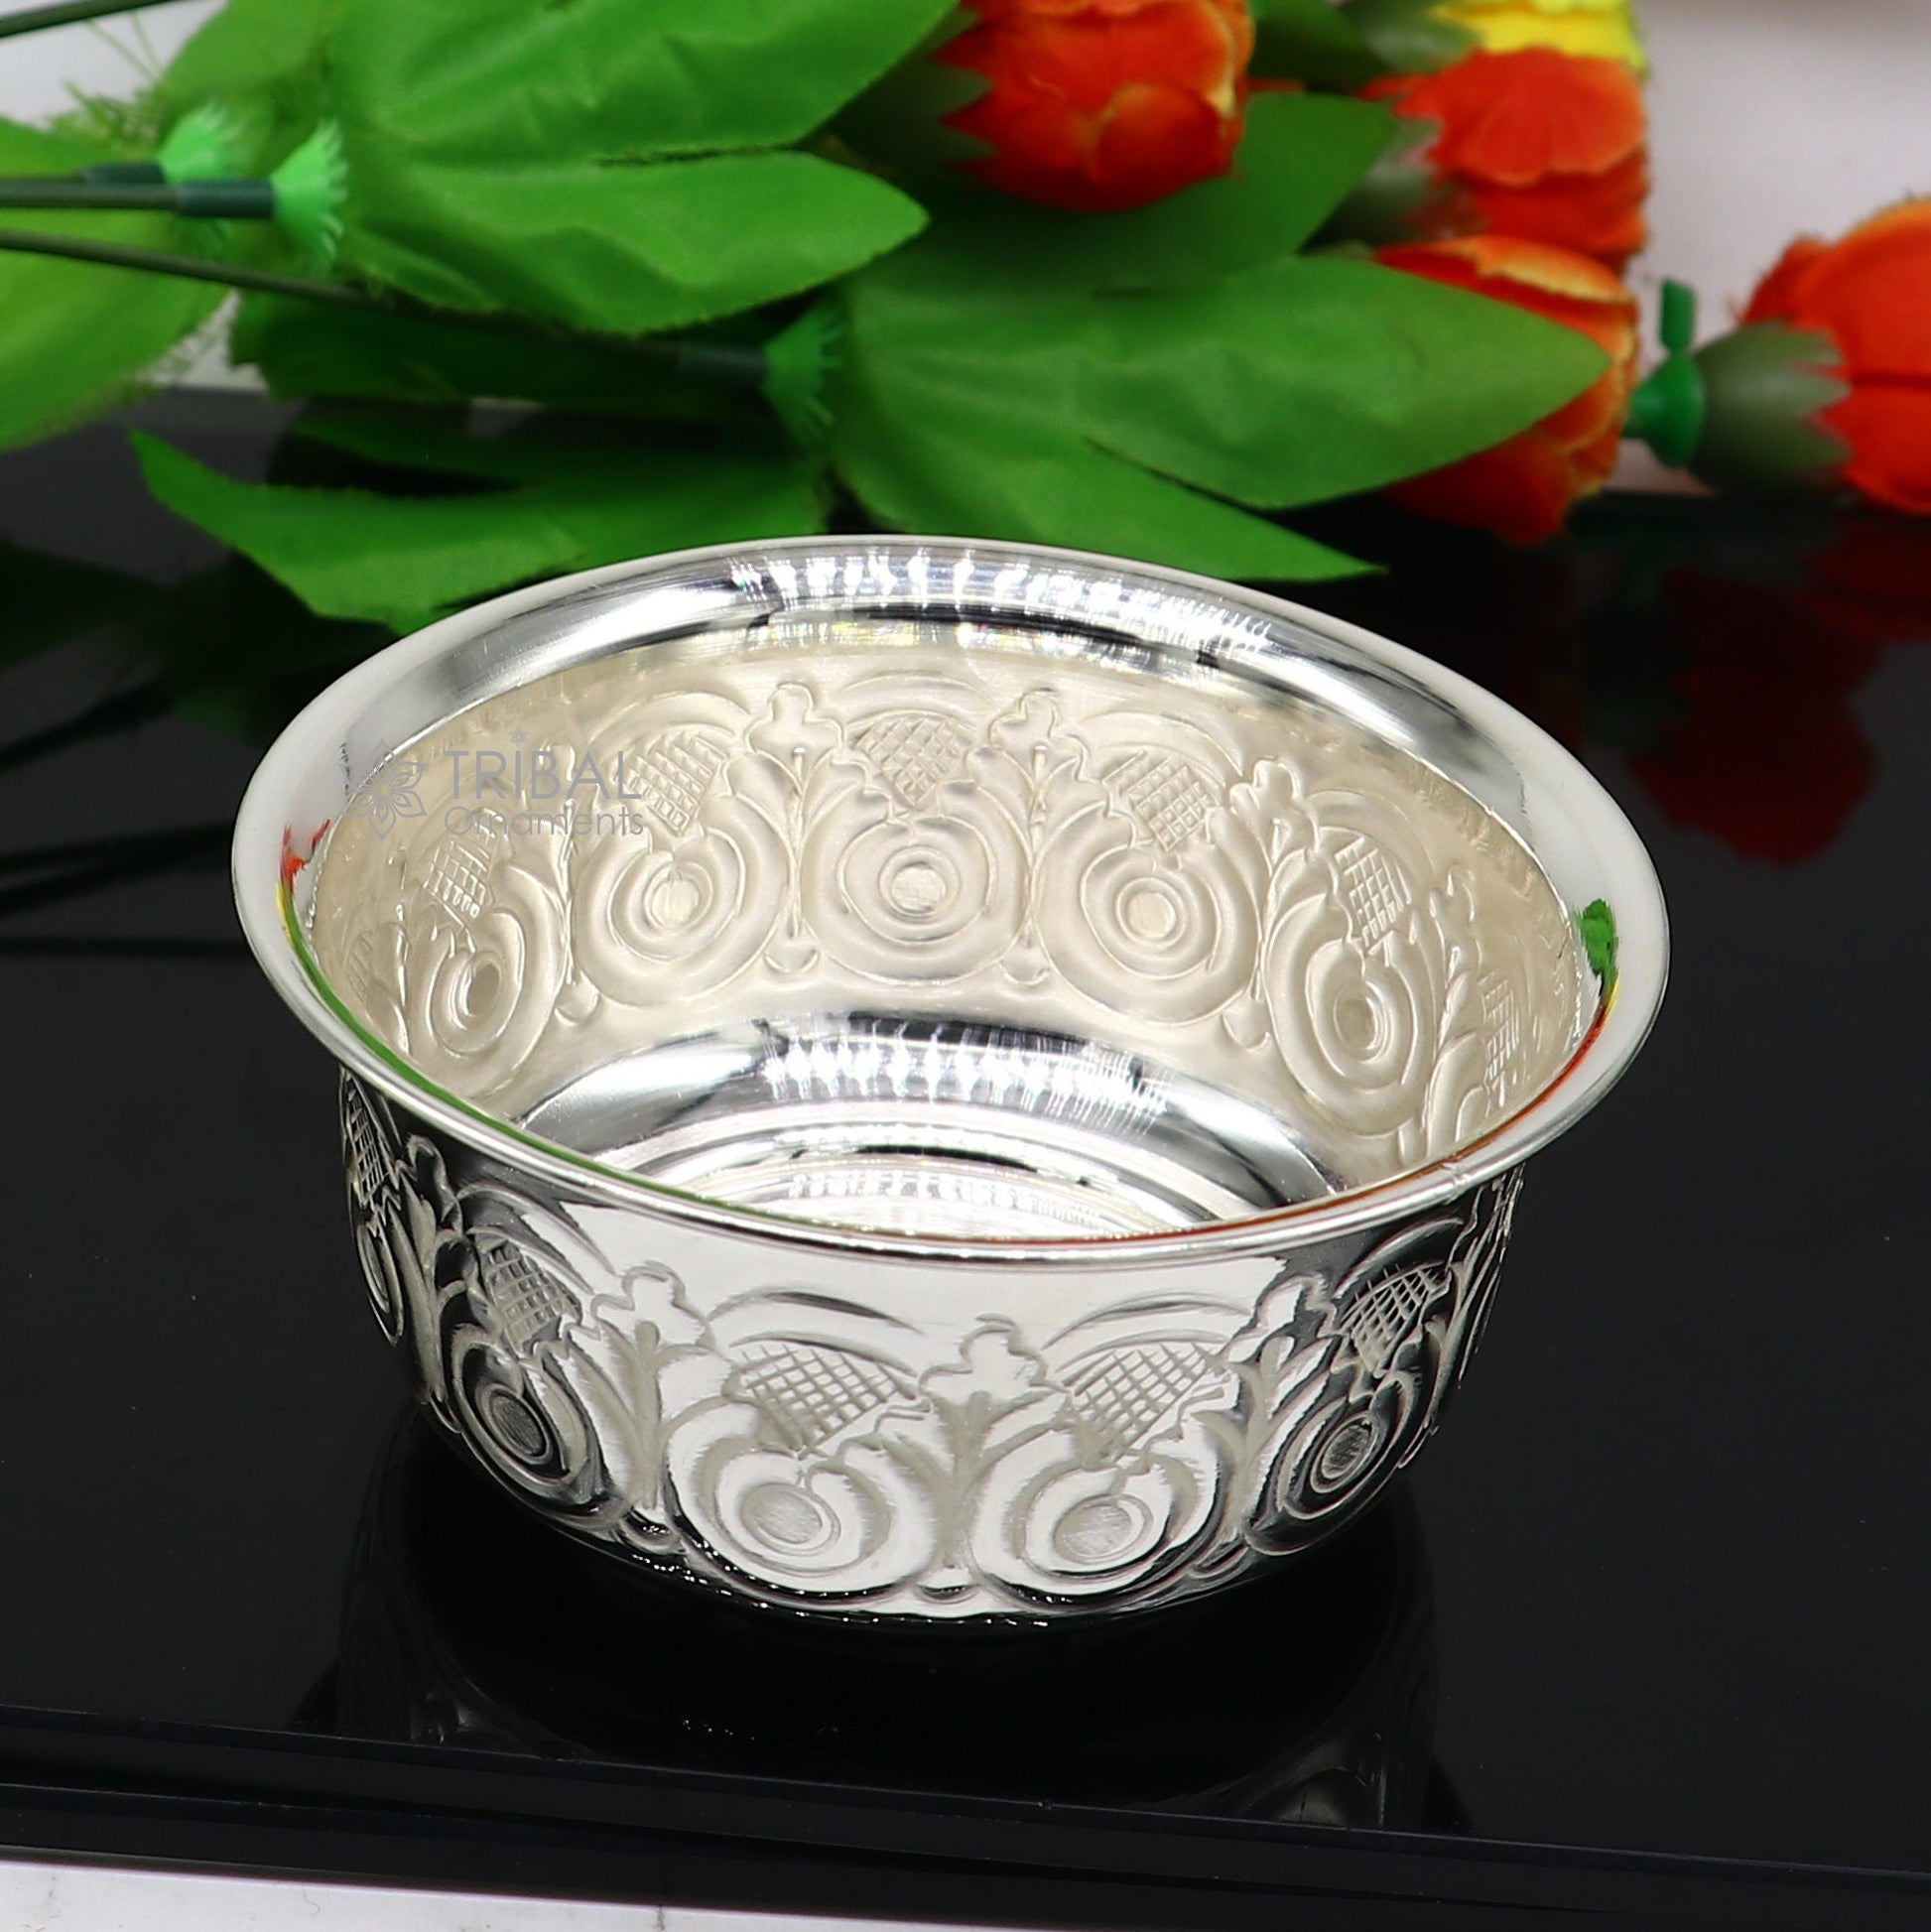 Silver handmade unique design work bowl, silver utensils for rice ceremony Annaprasan, silver worshipping/puja utensils prasad bowl sv280 - TRIBAL ORNAMENTS